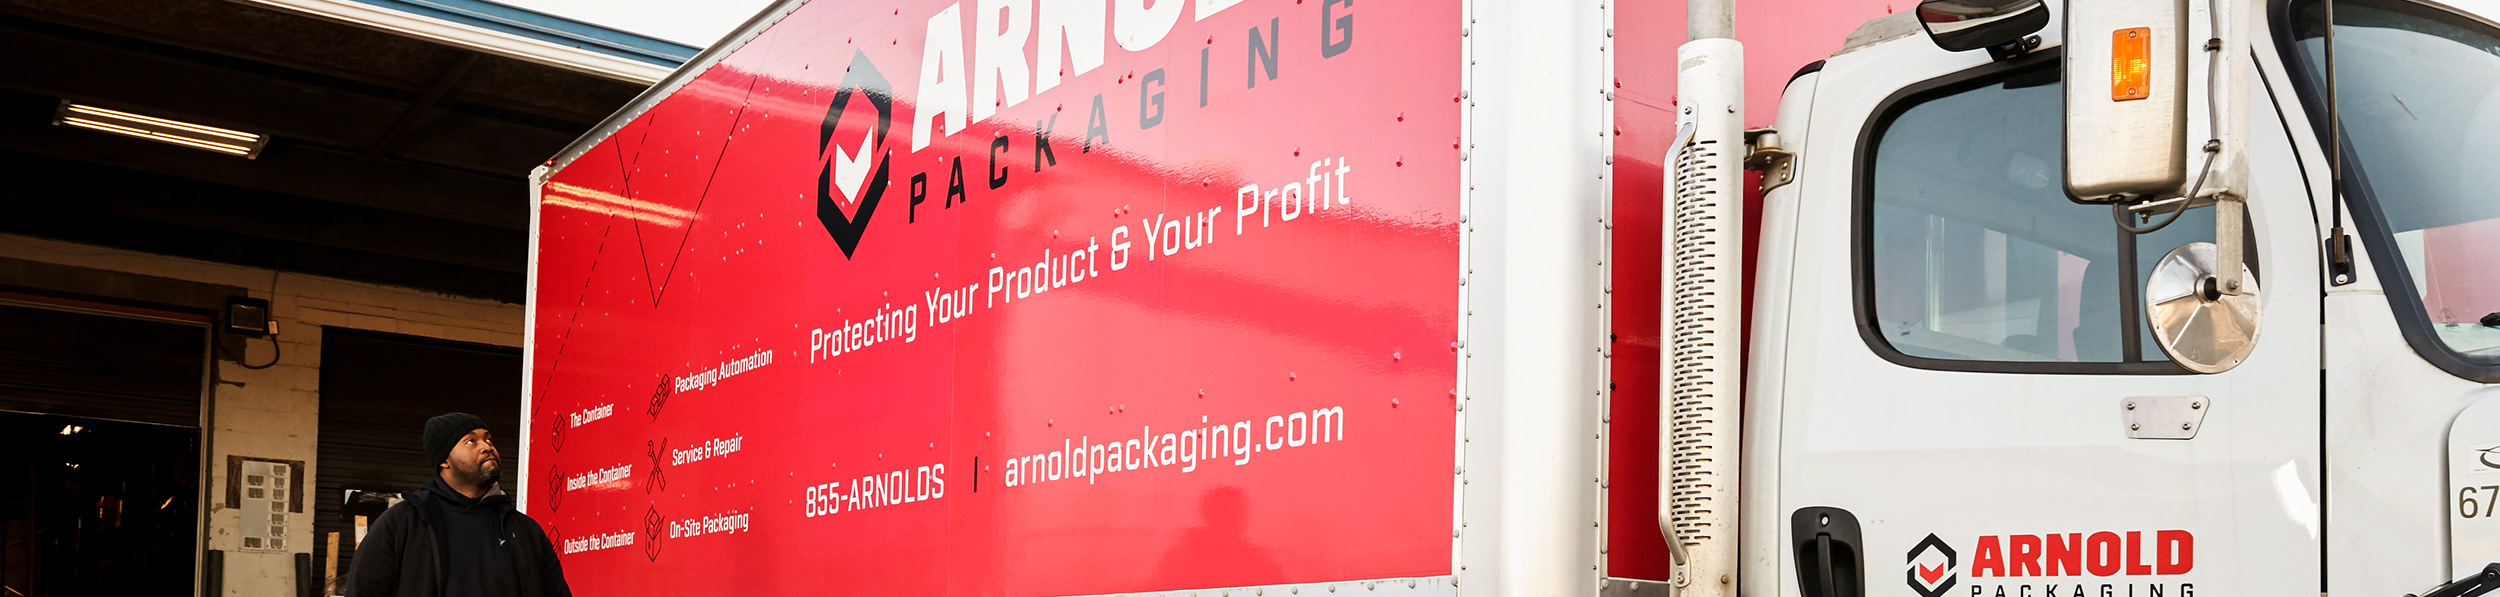 Arnold Packaging - World Class Packaging